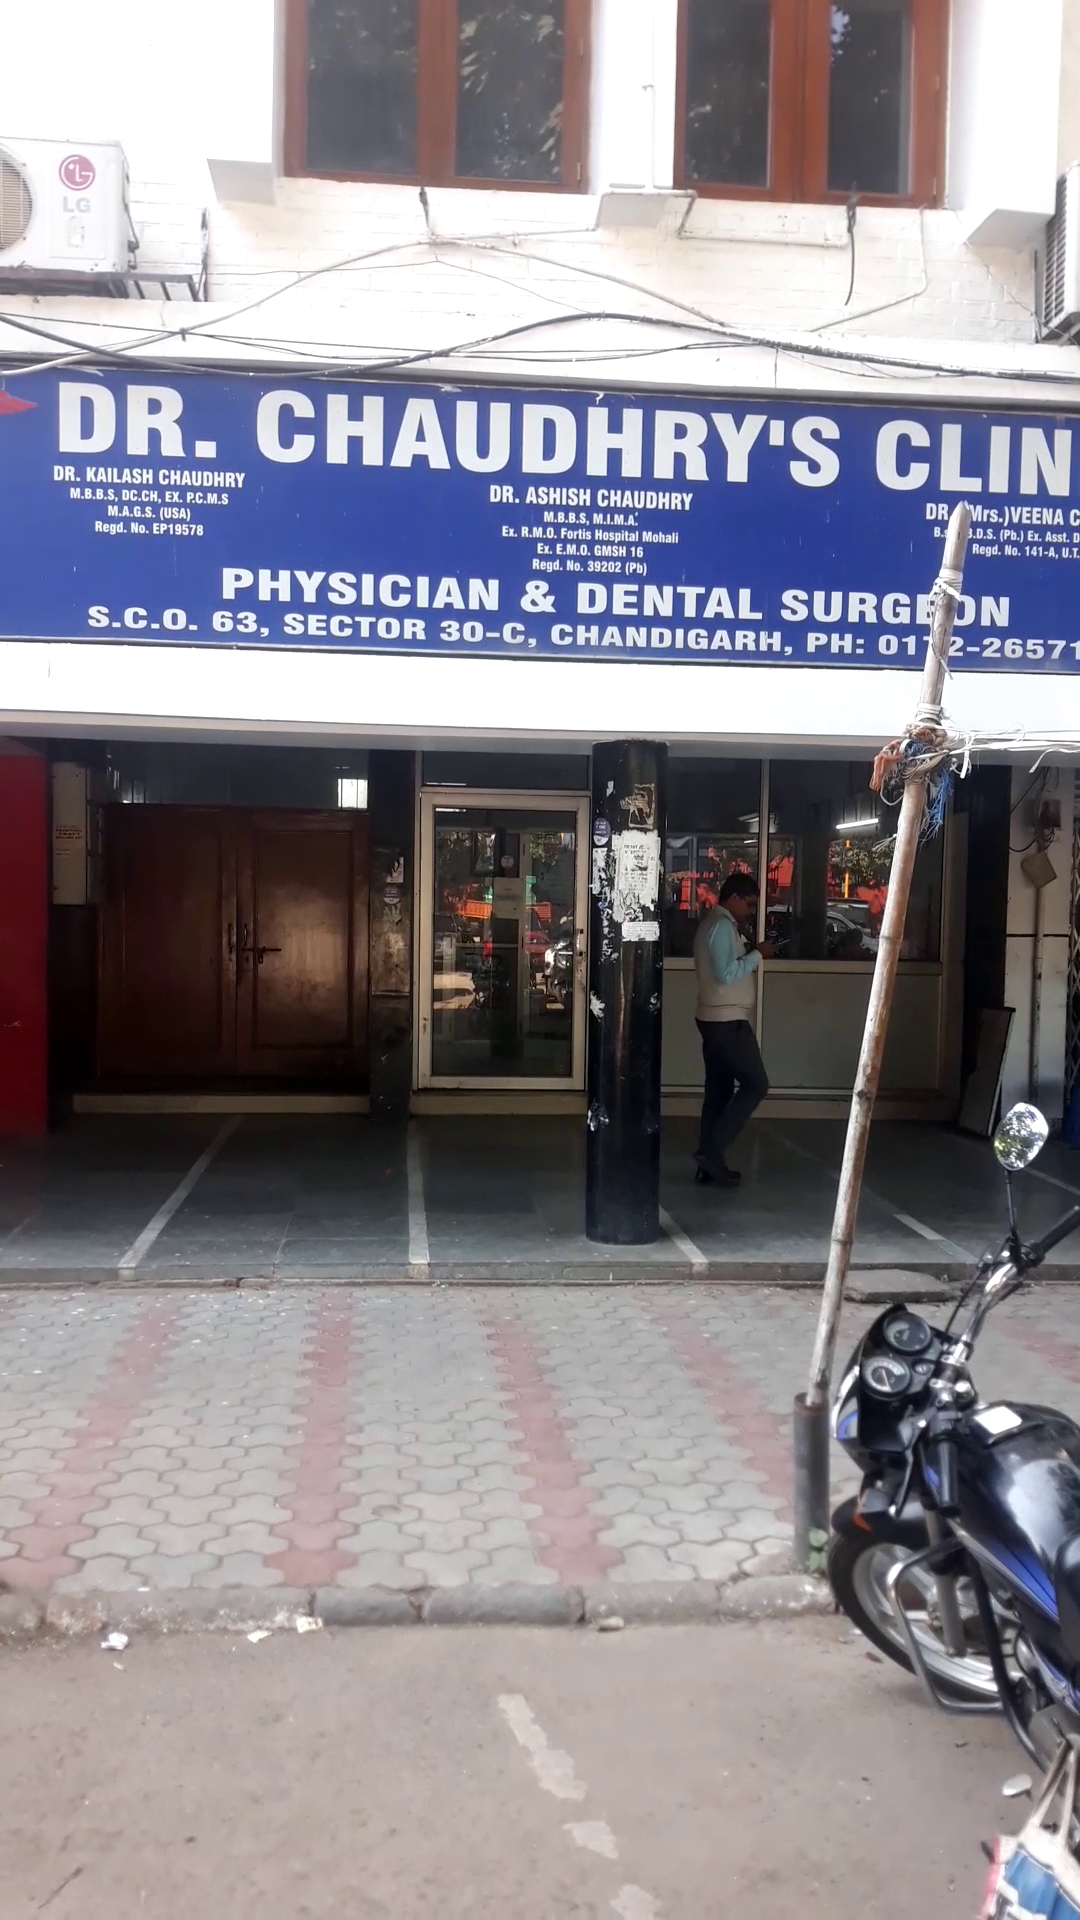 Dr. Chaudhary